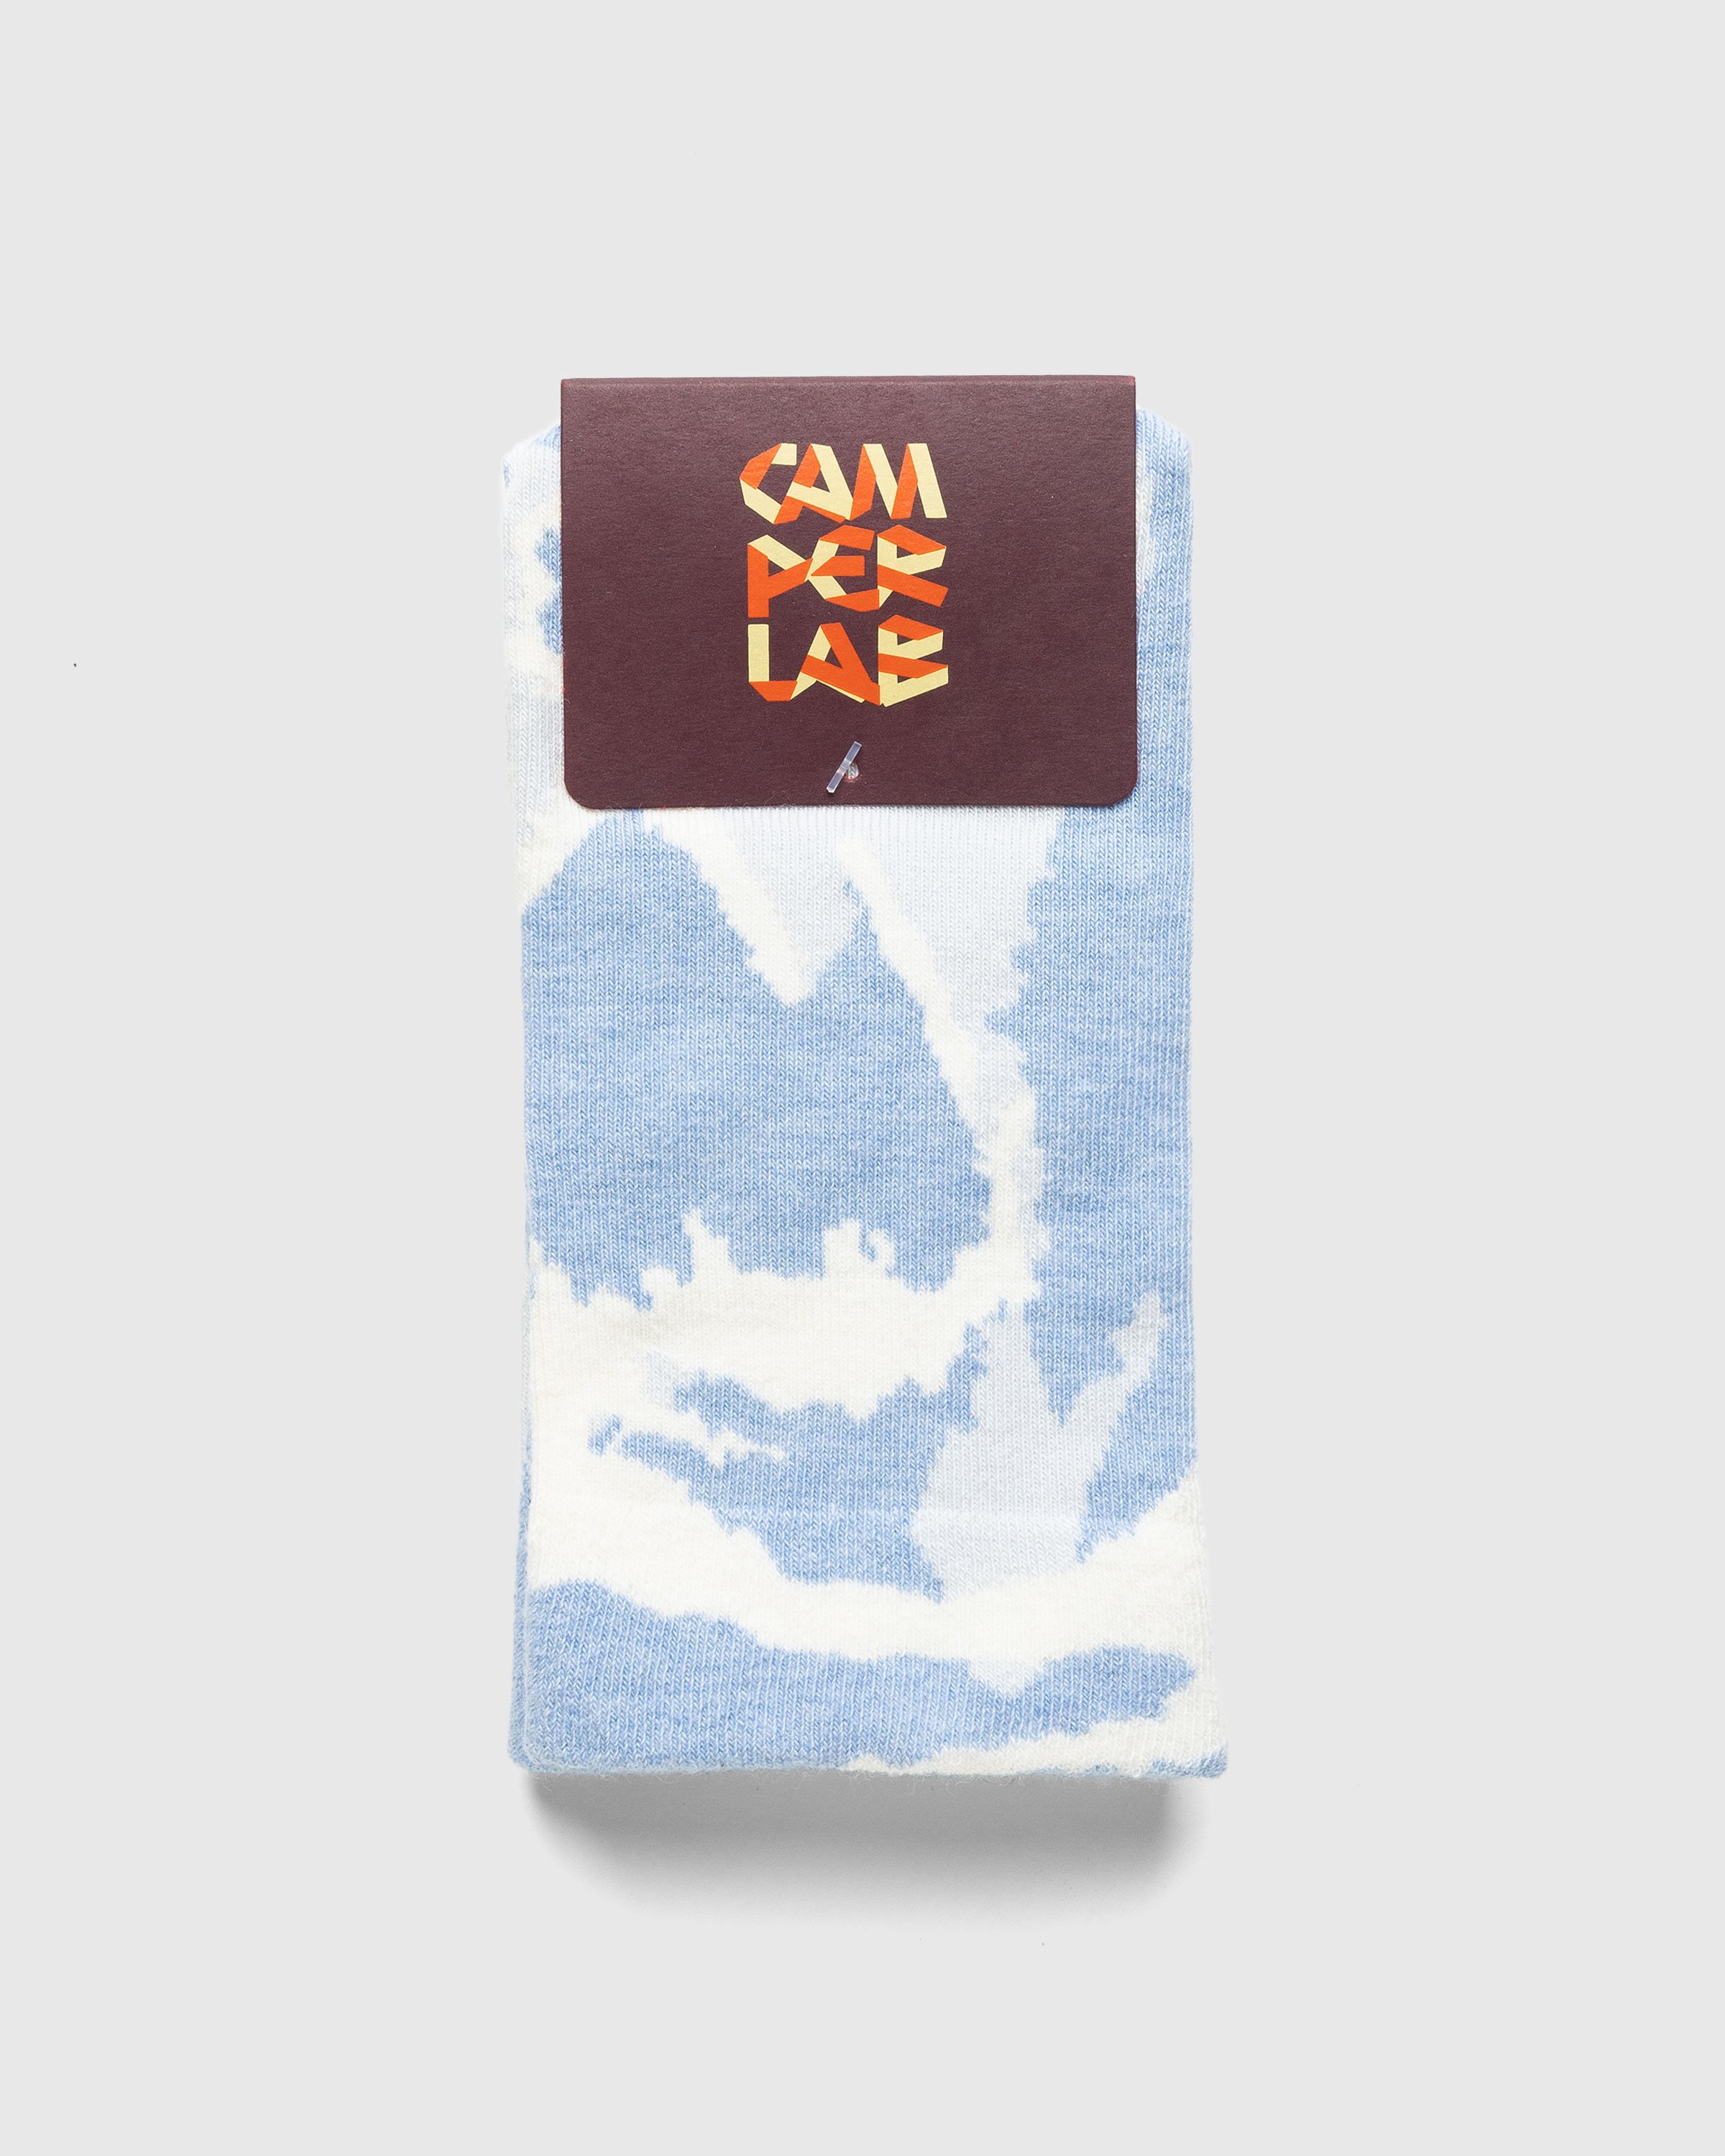 CAMPERLAB - Socks - Accessories - Multi - Image 2